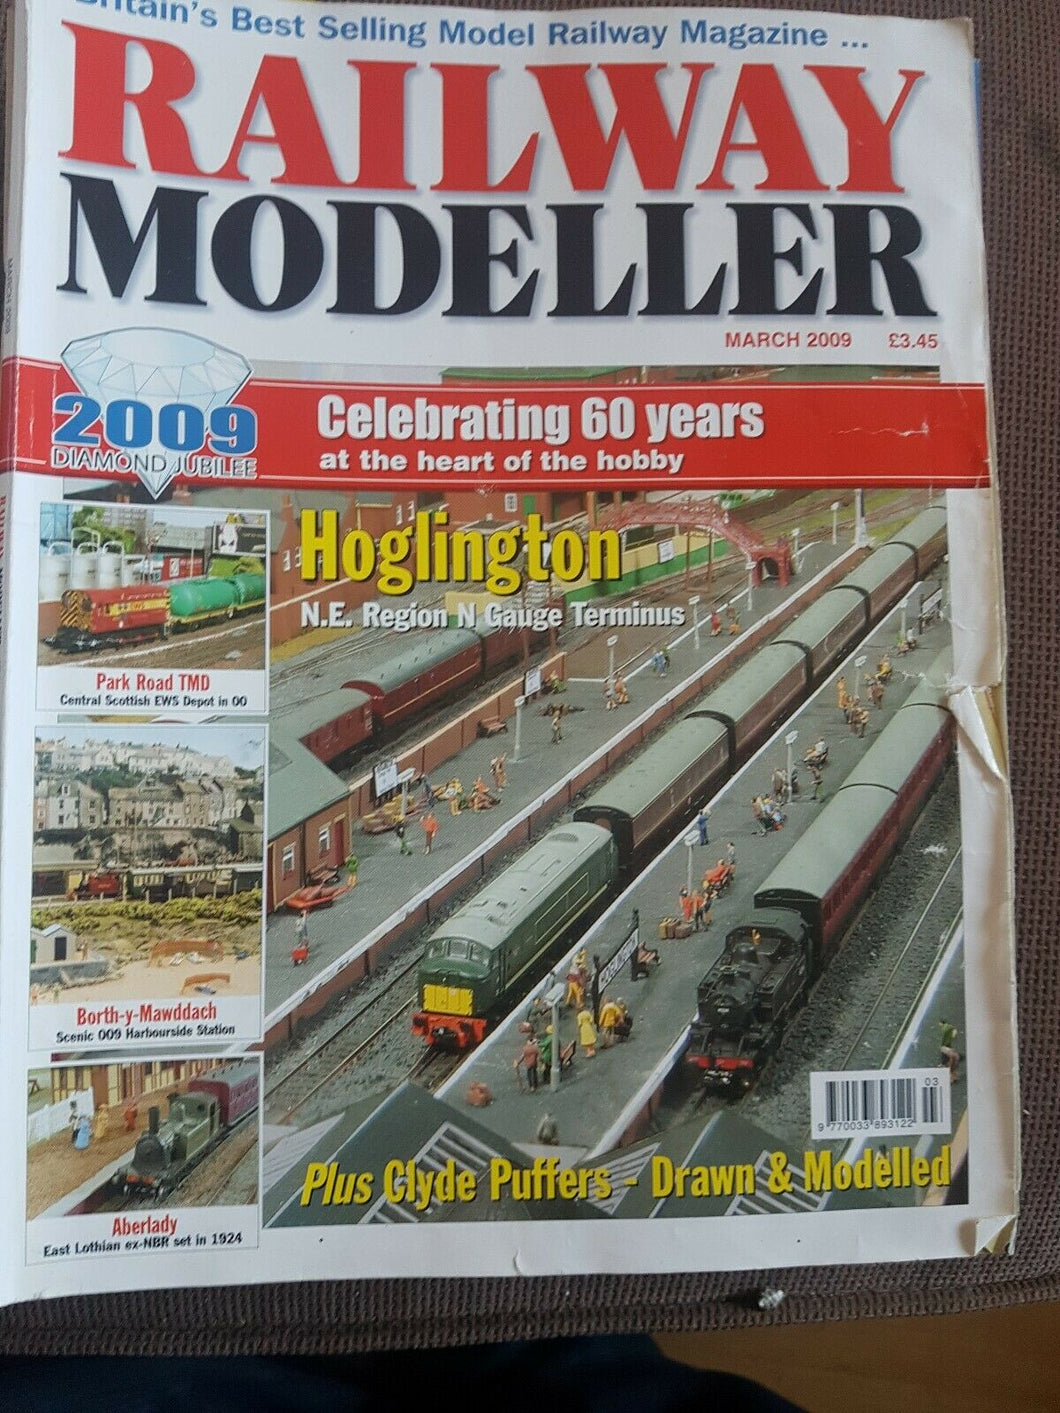 Railway modeller magazine March 2009 has a tear on the cover.